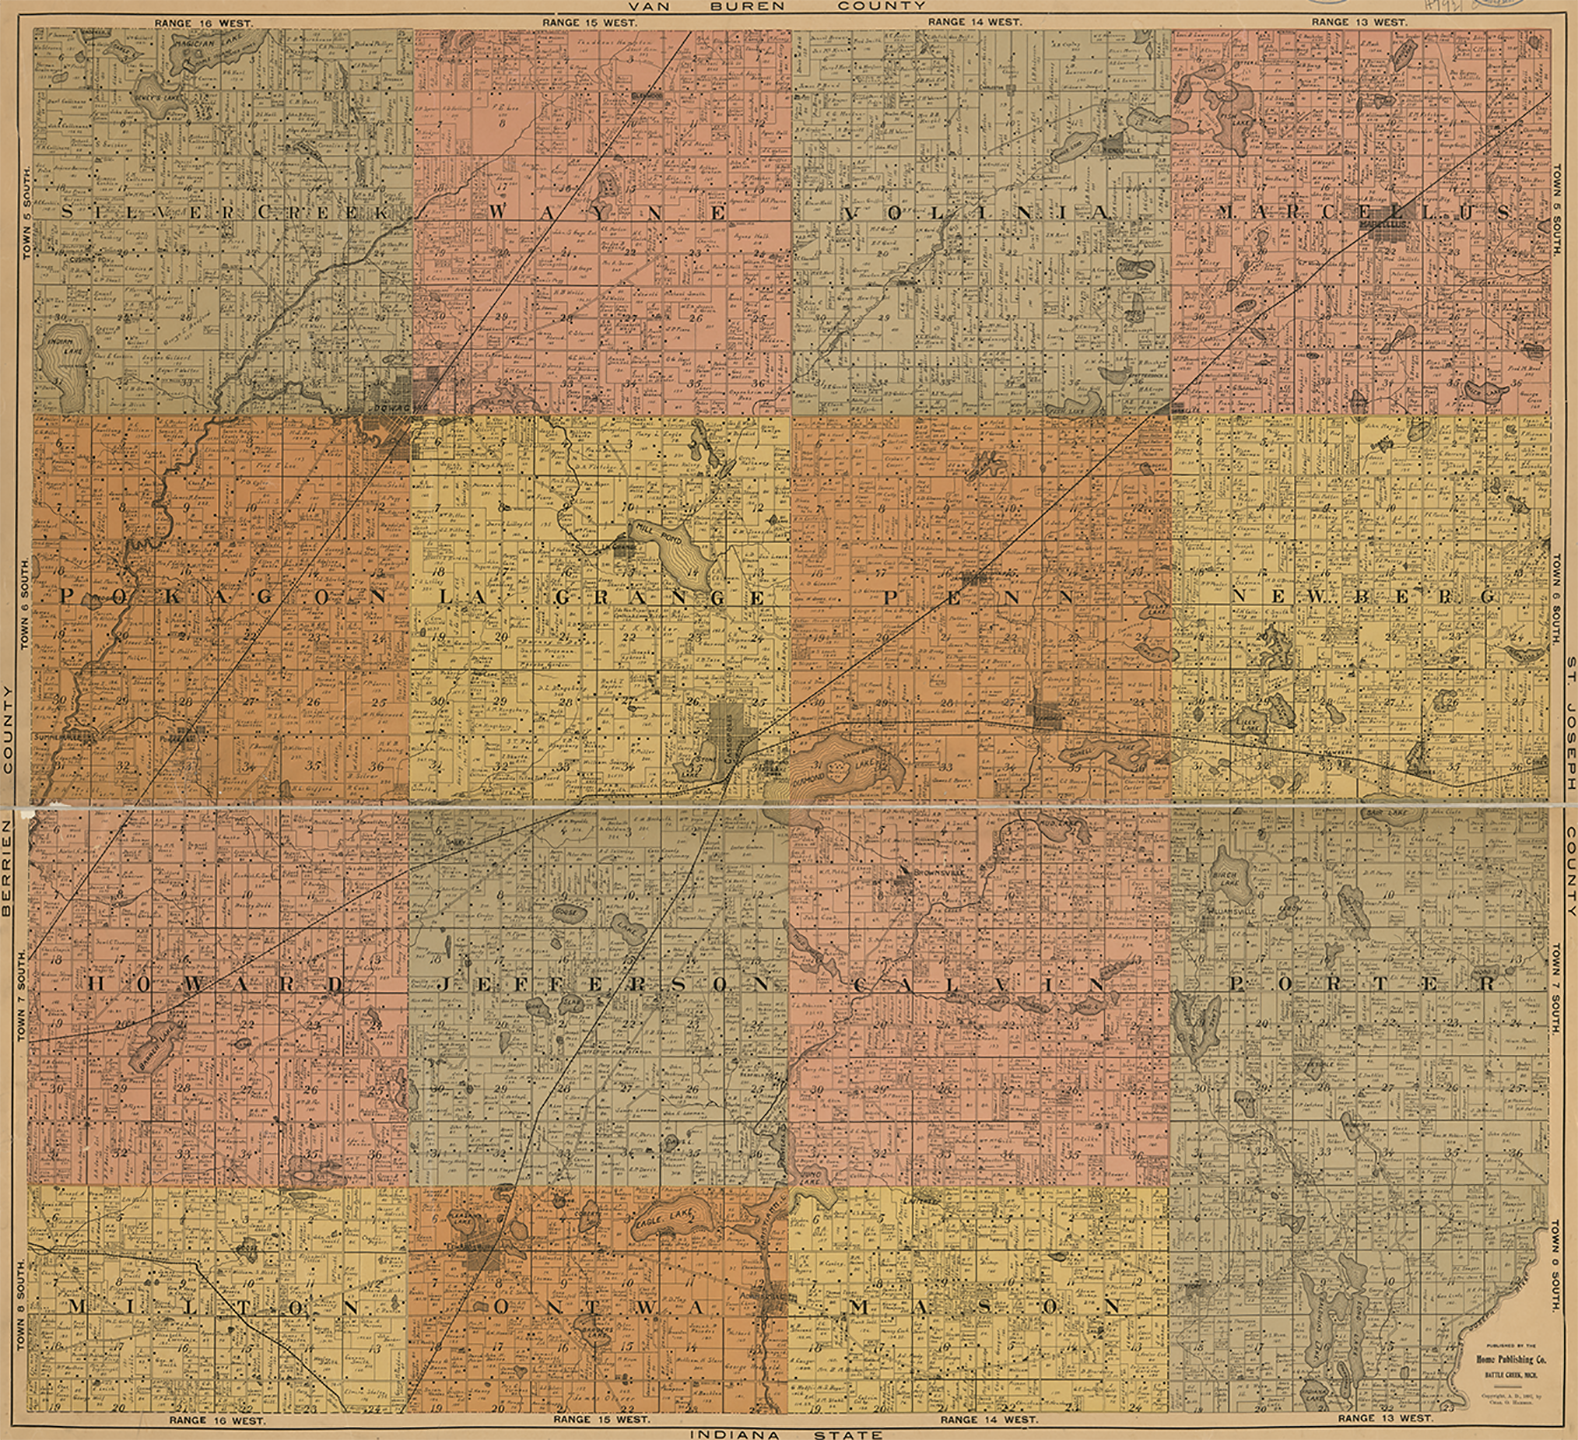 1897 Cass County Michigan landownership map